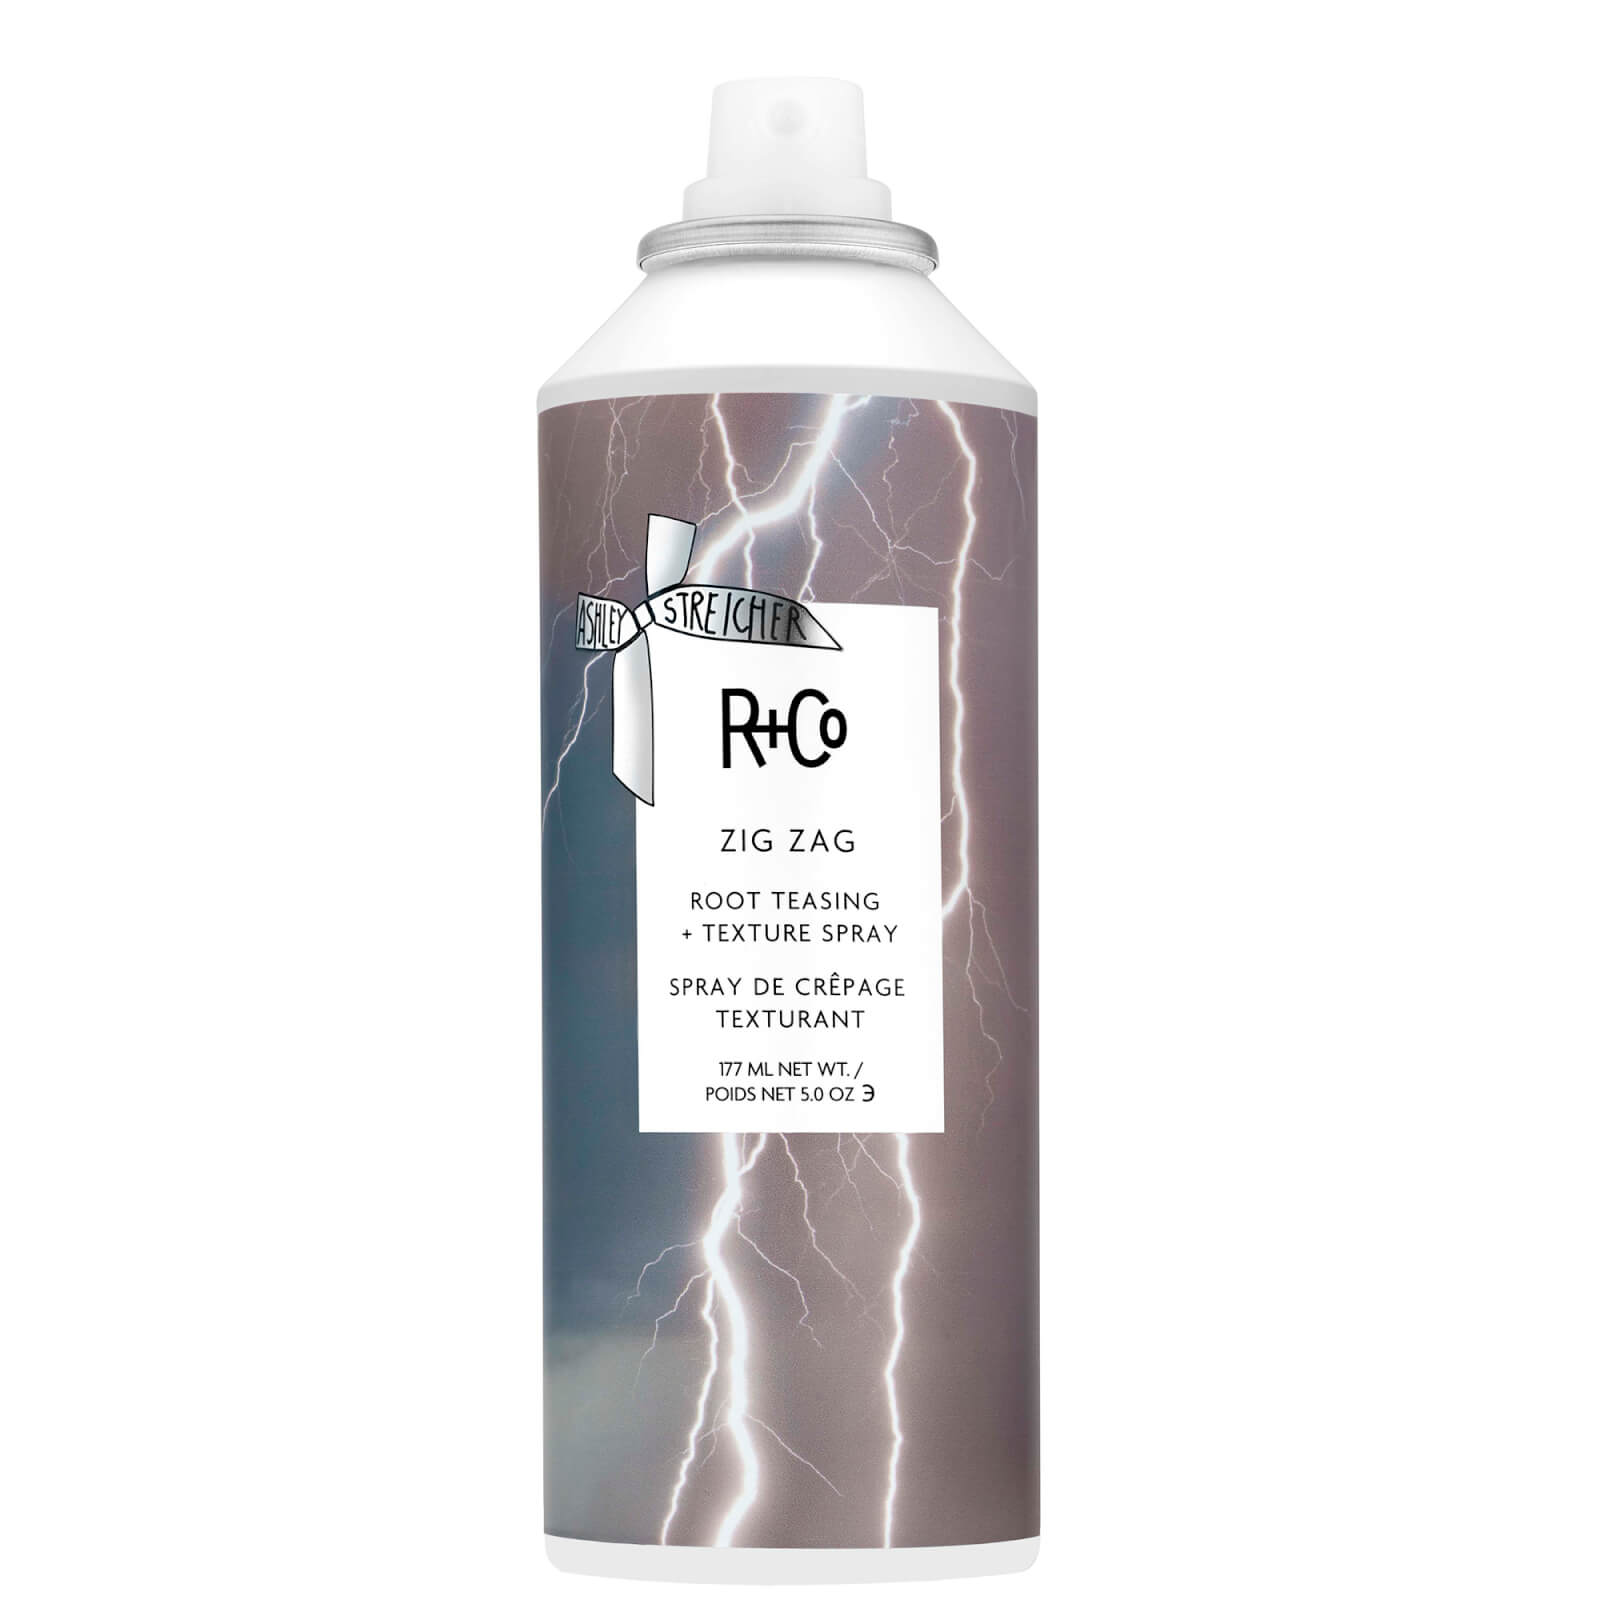 R + Co Zig Zag Root Teasing Texture Spray 5 oz